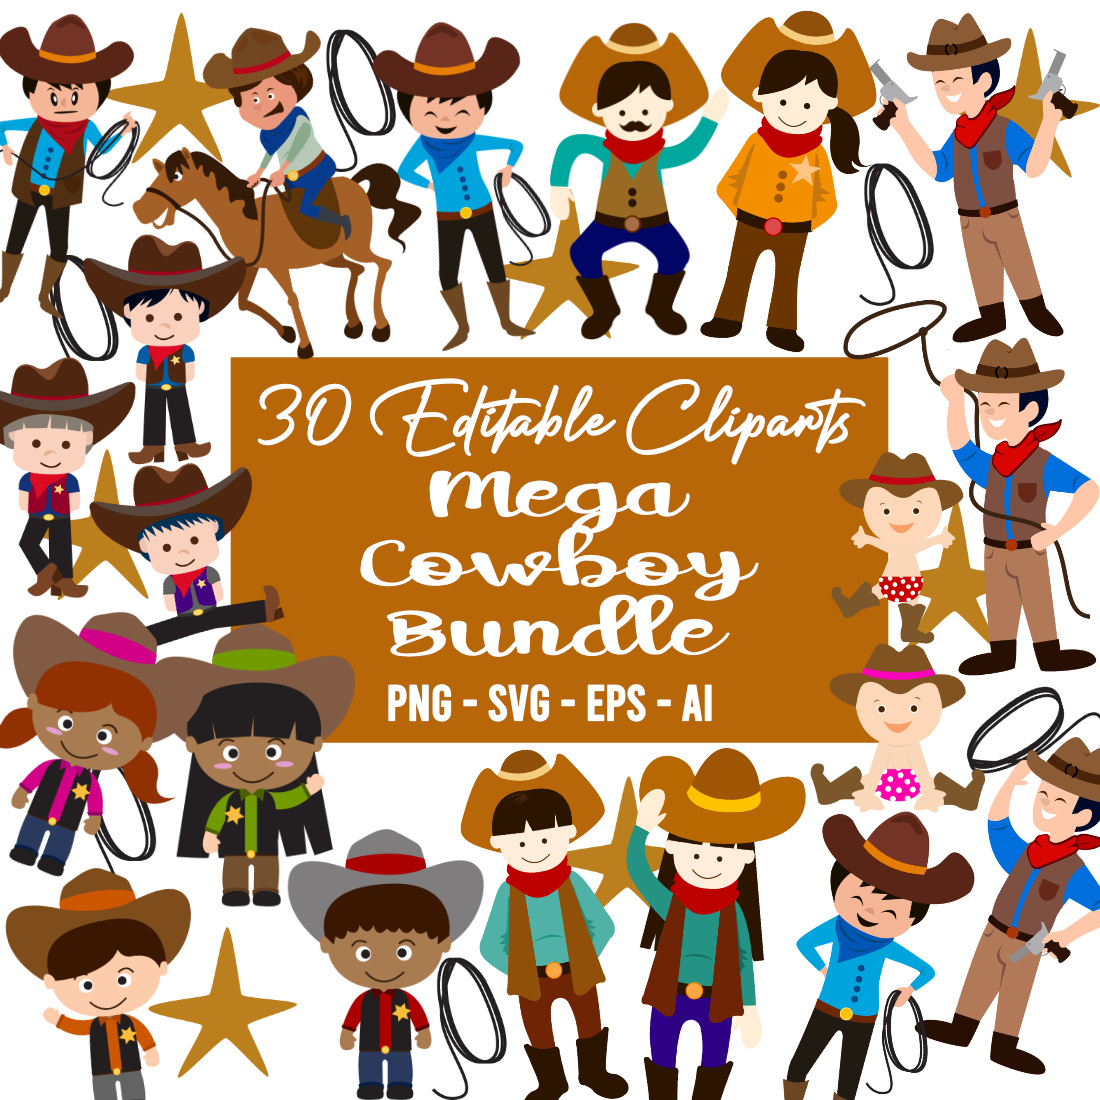 Cowboys Editable Clipart Design cover image.